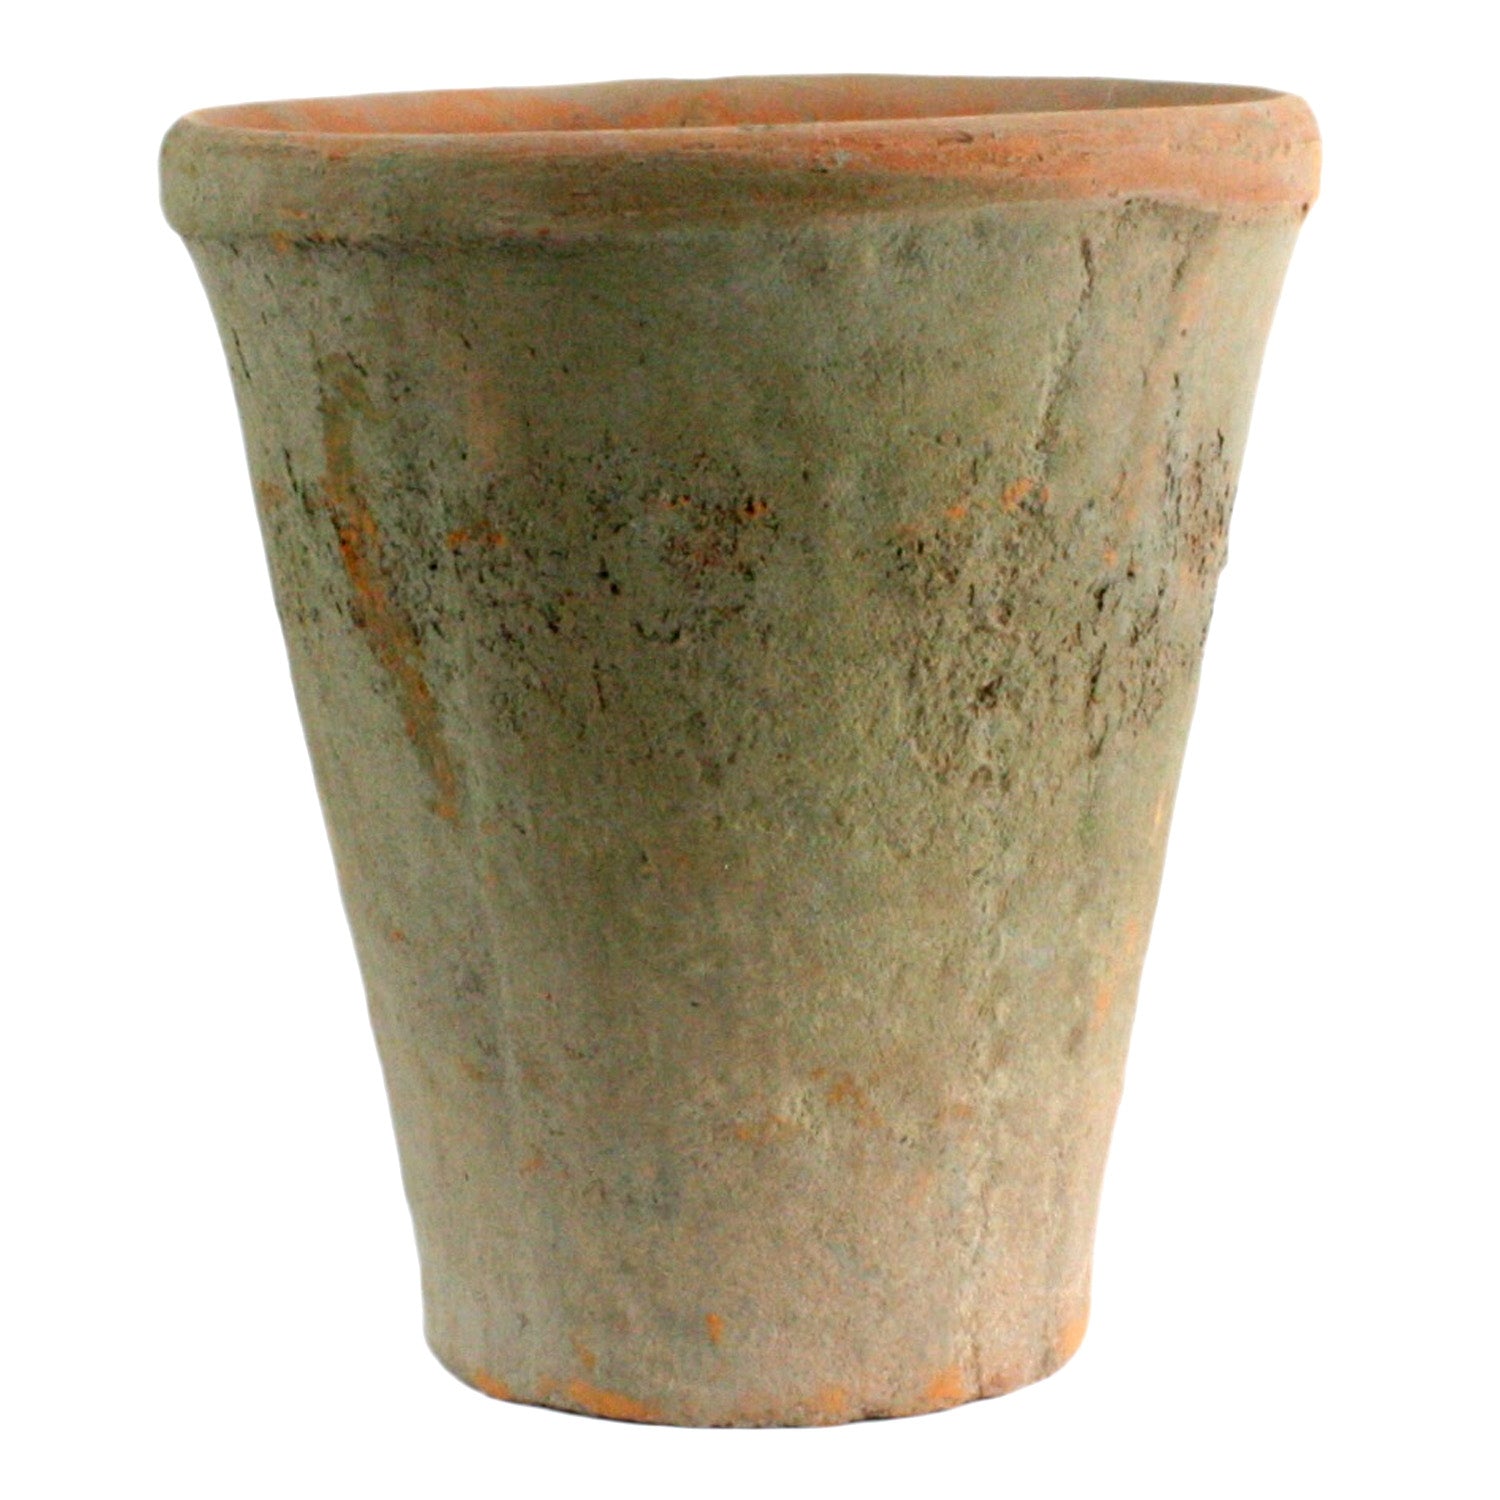 Rustic Terra Cotta Rose Pot - Med - Antique Red (5610057891997)